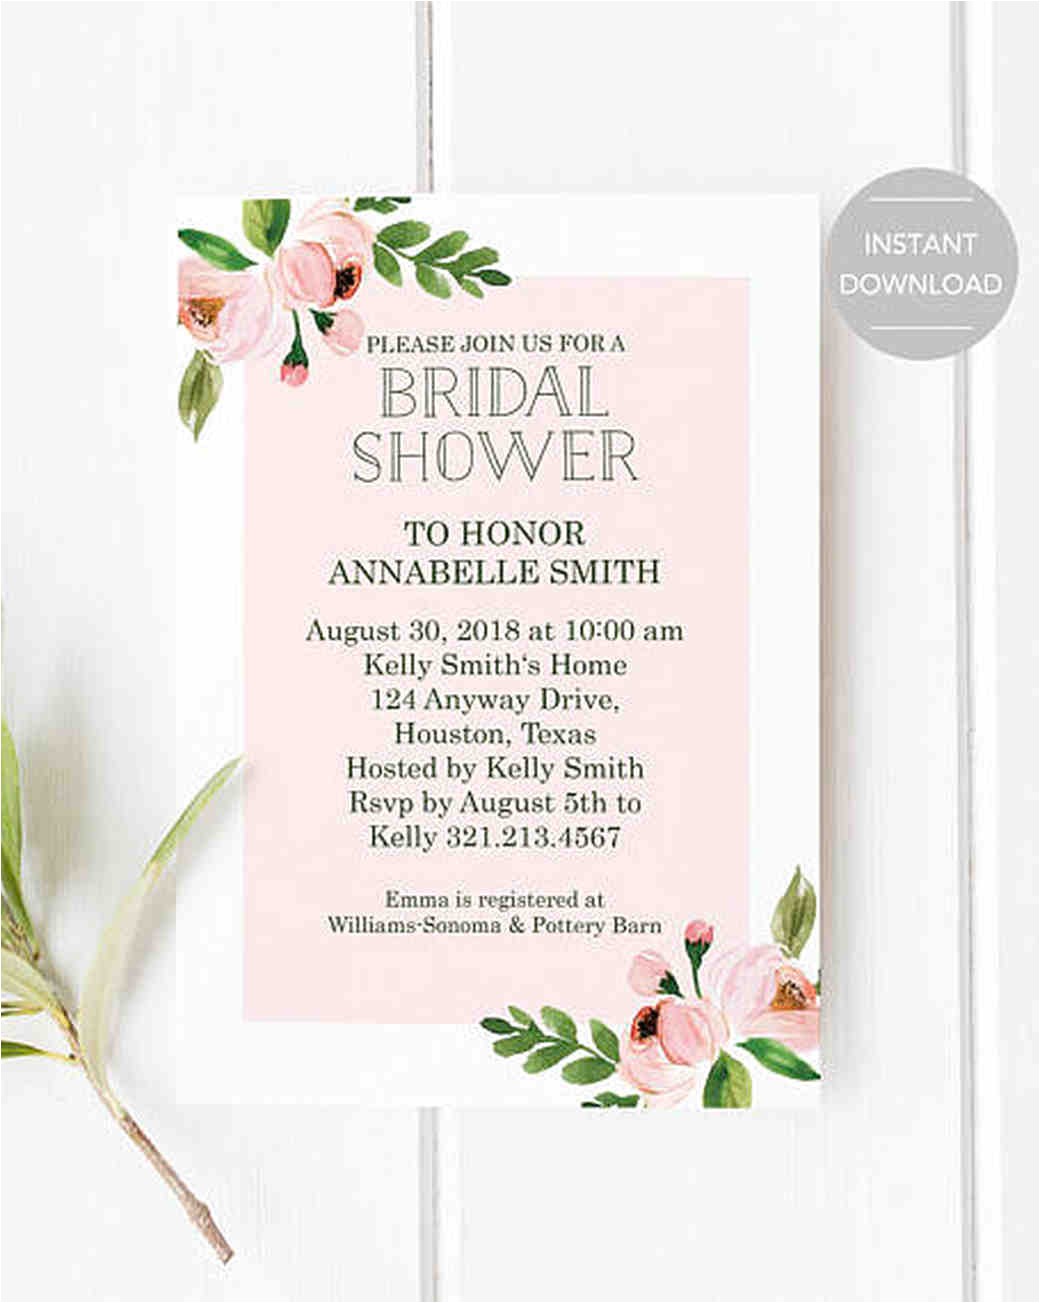 Martha Stewart Bridal Shower Invitation Wording 10 Affordable Bridal Shower Invitations You Can Print at